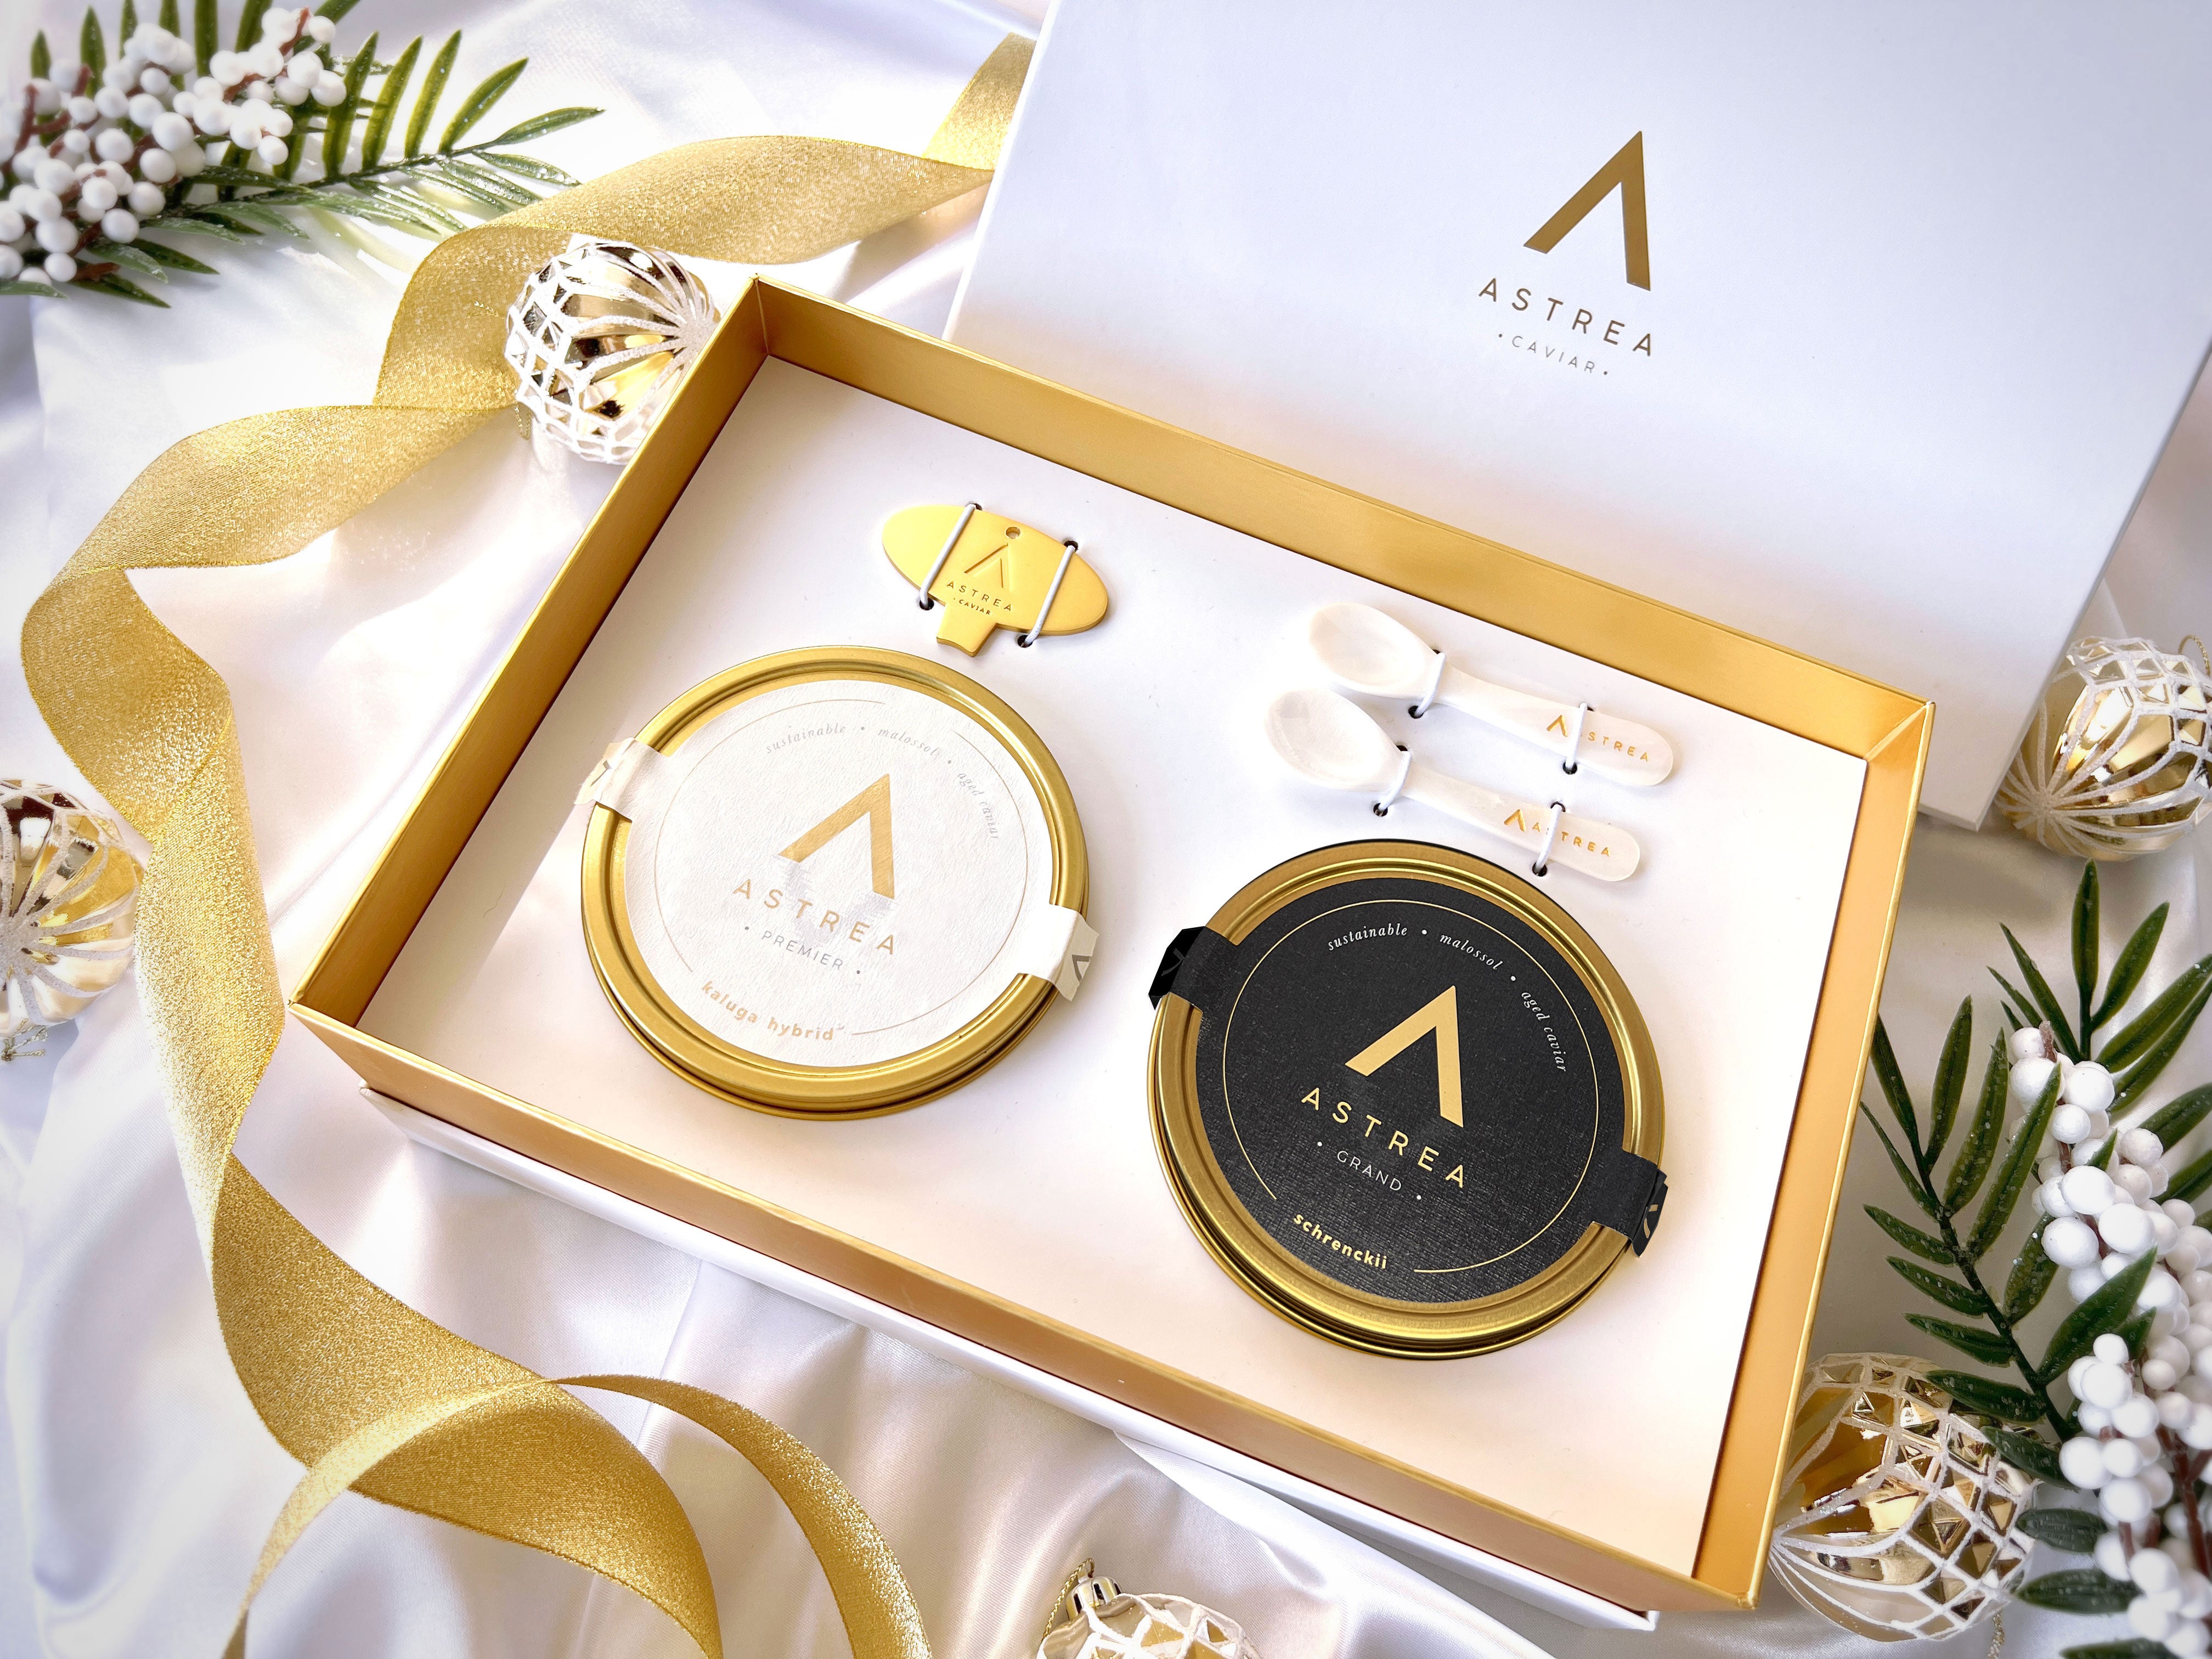 Astrea Caviar Gift Box Set